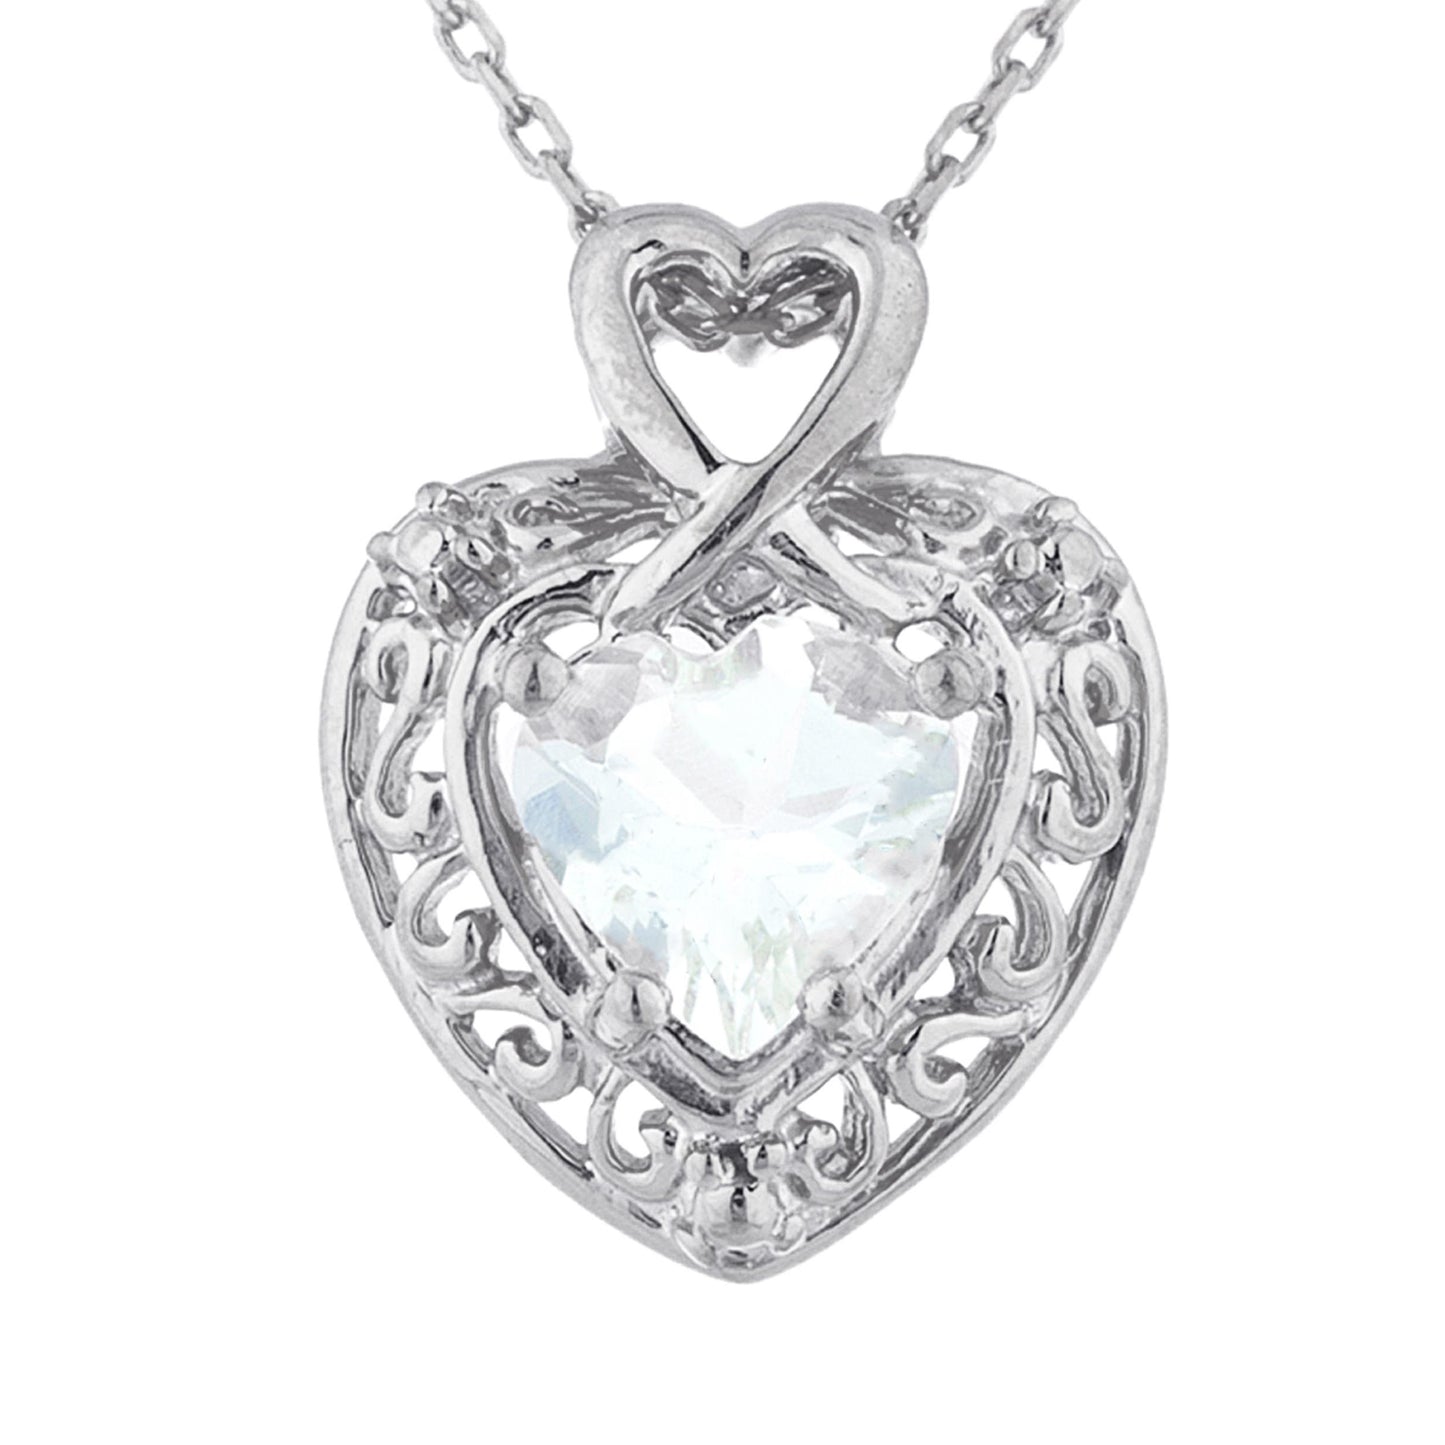 14Kt Gold Aquamarine Heart Design Pendant Necklace